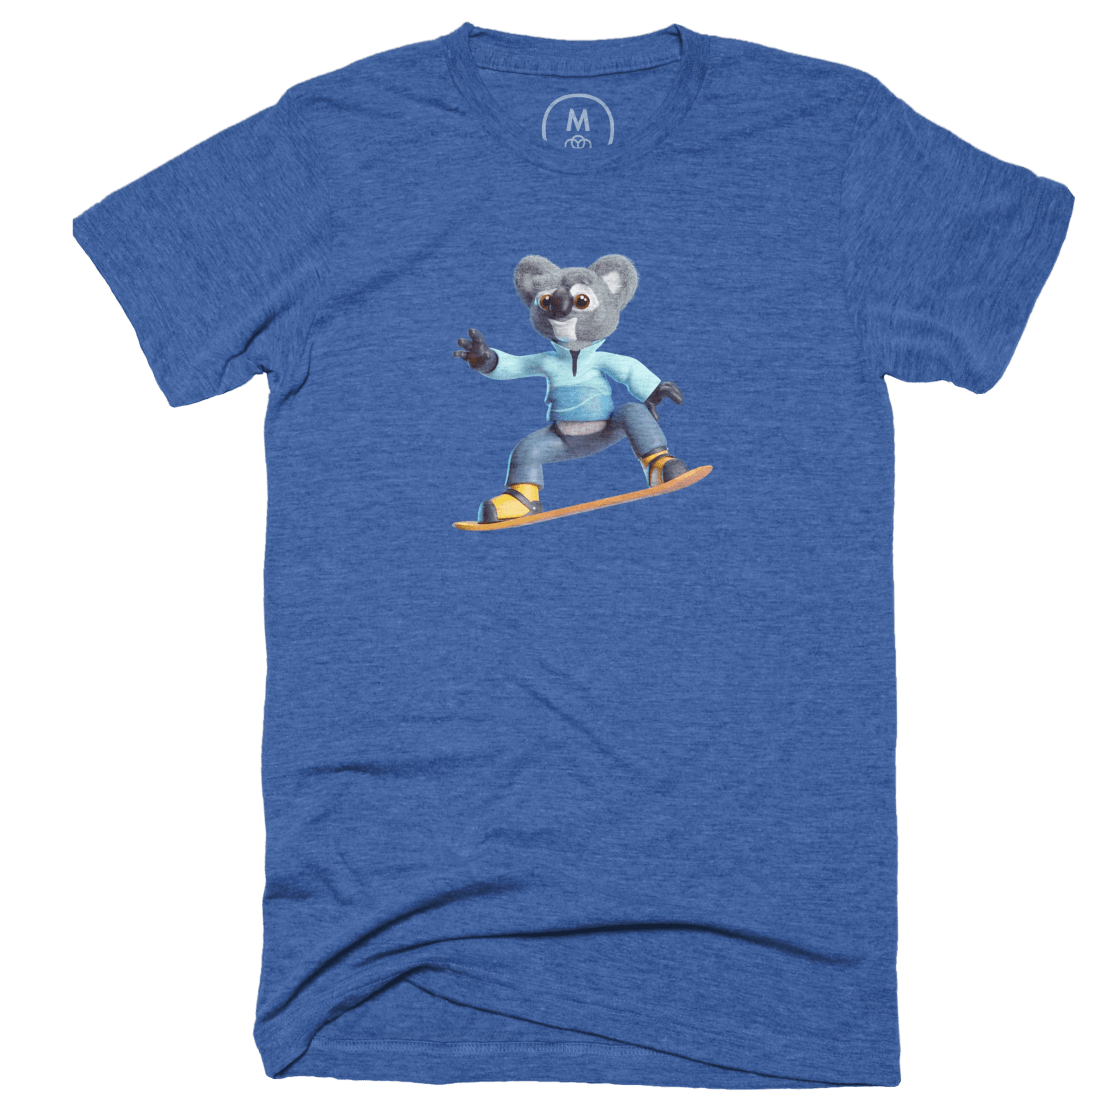 Blue T-Shirt with a Koala